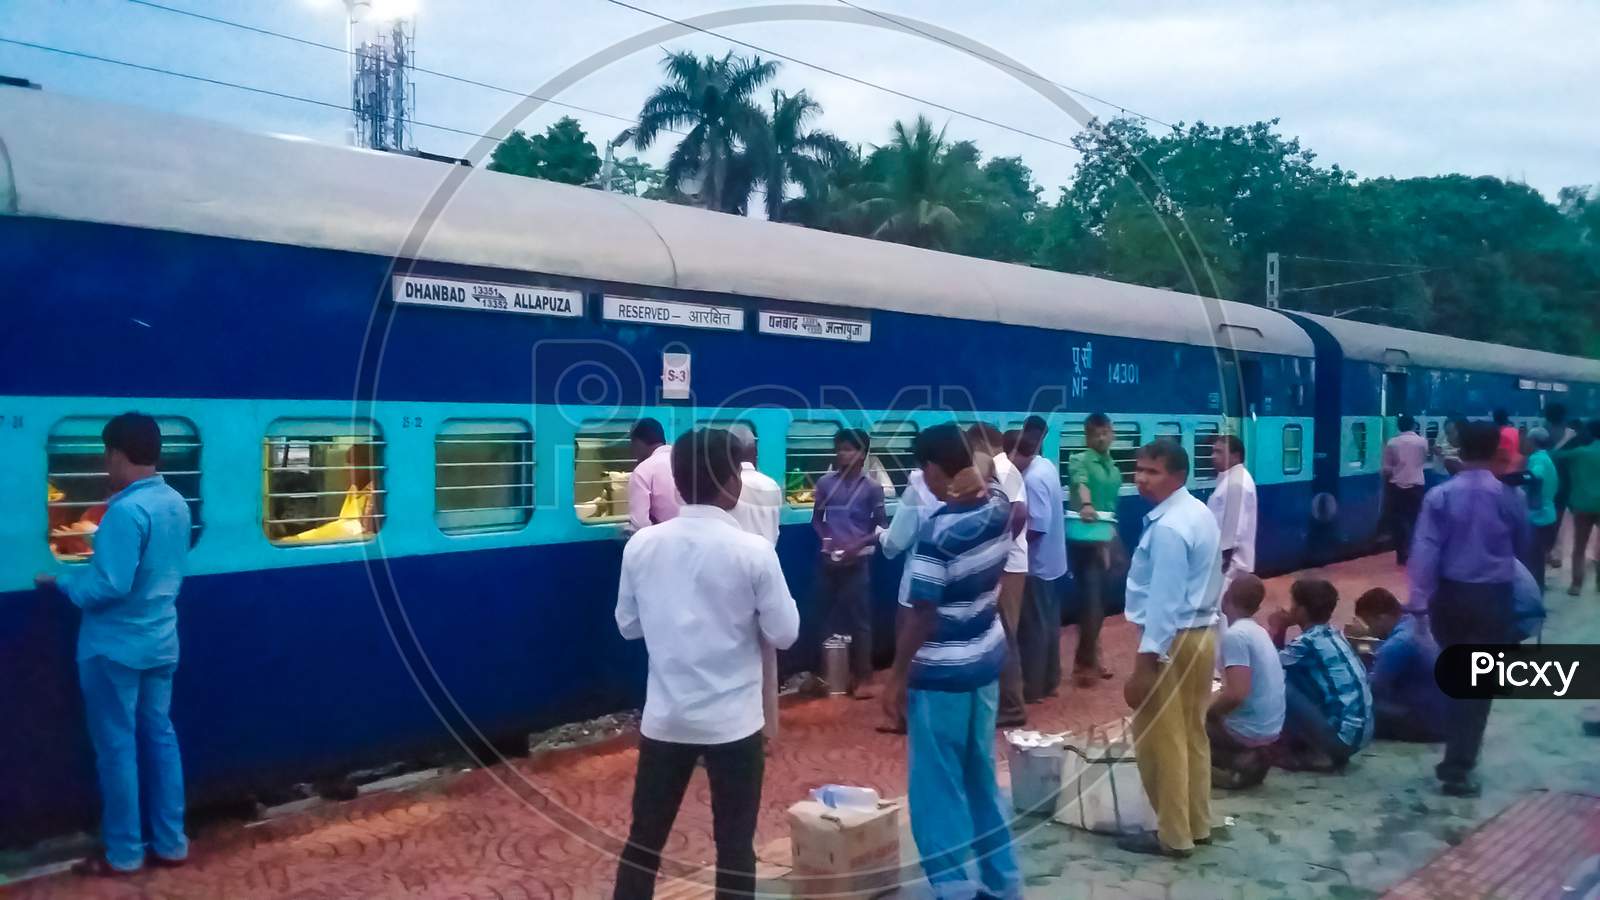 Indian Express AC blue train and platform